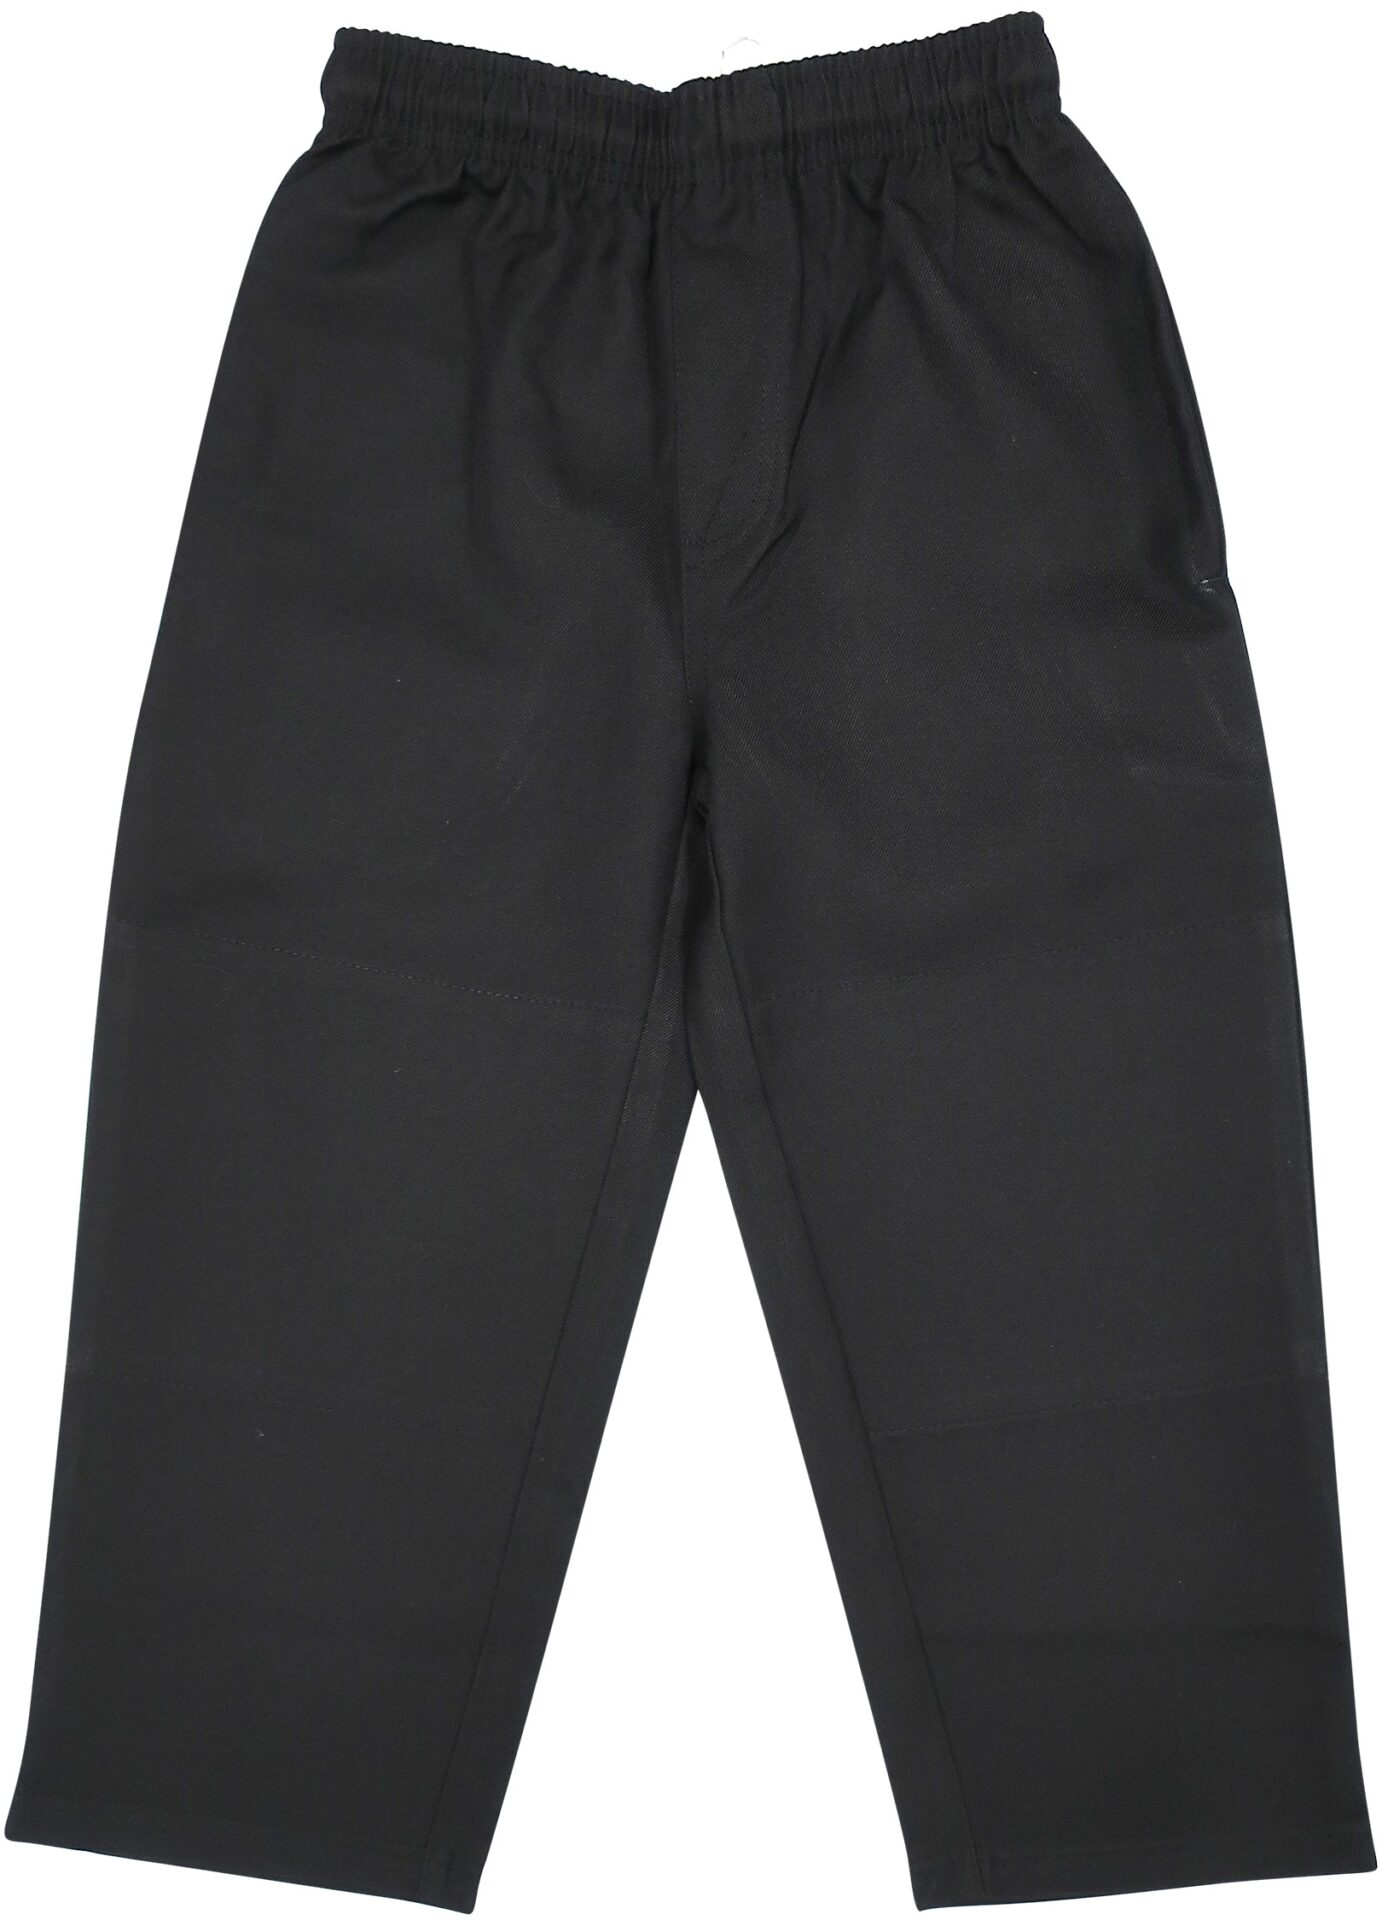 BLACK SURF STYLE GABERDINE PANTS - Beleza School Uniforms